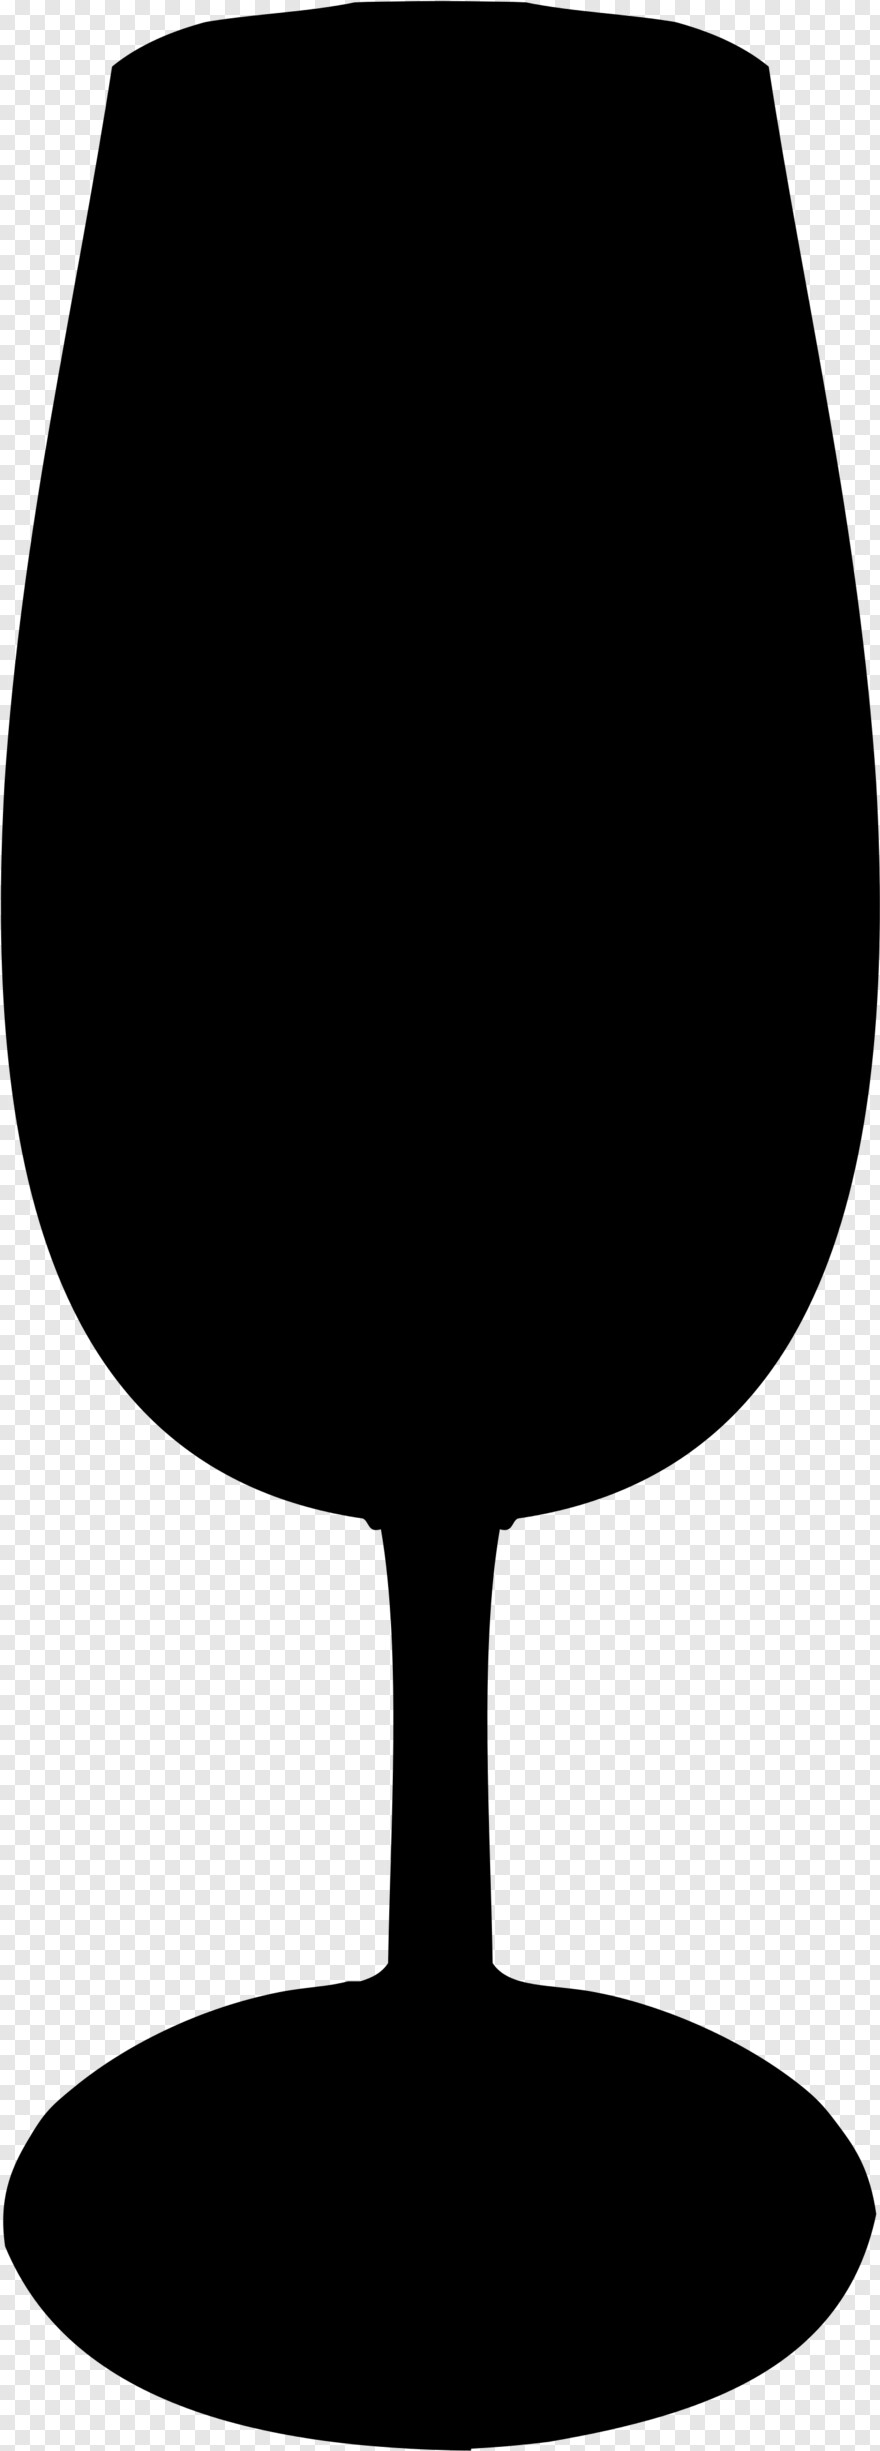 wine-glass-icon # 353251